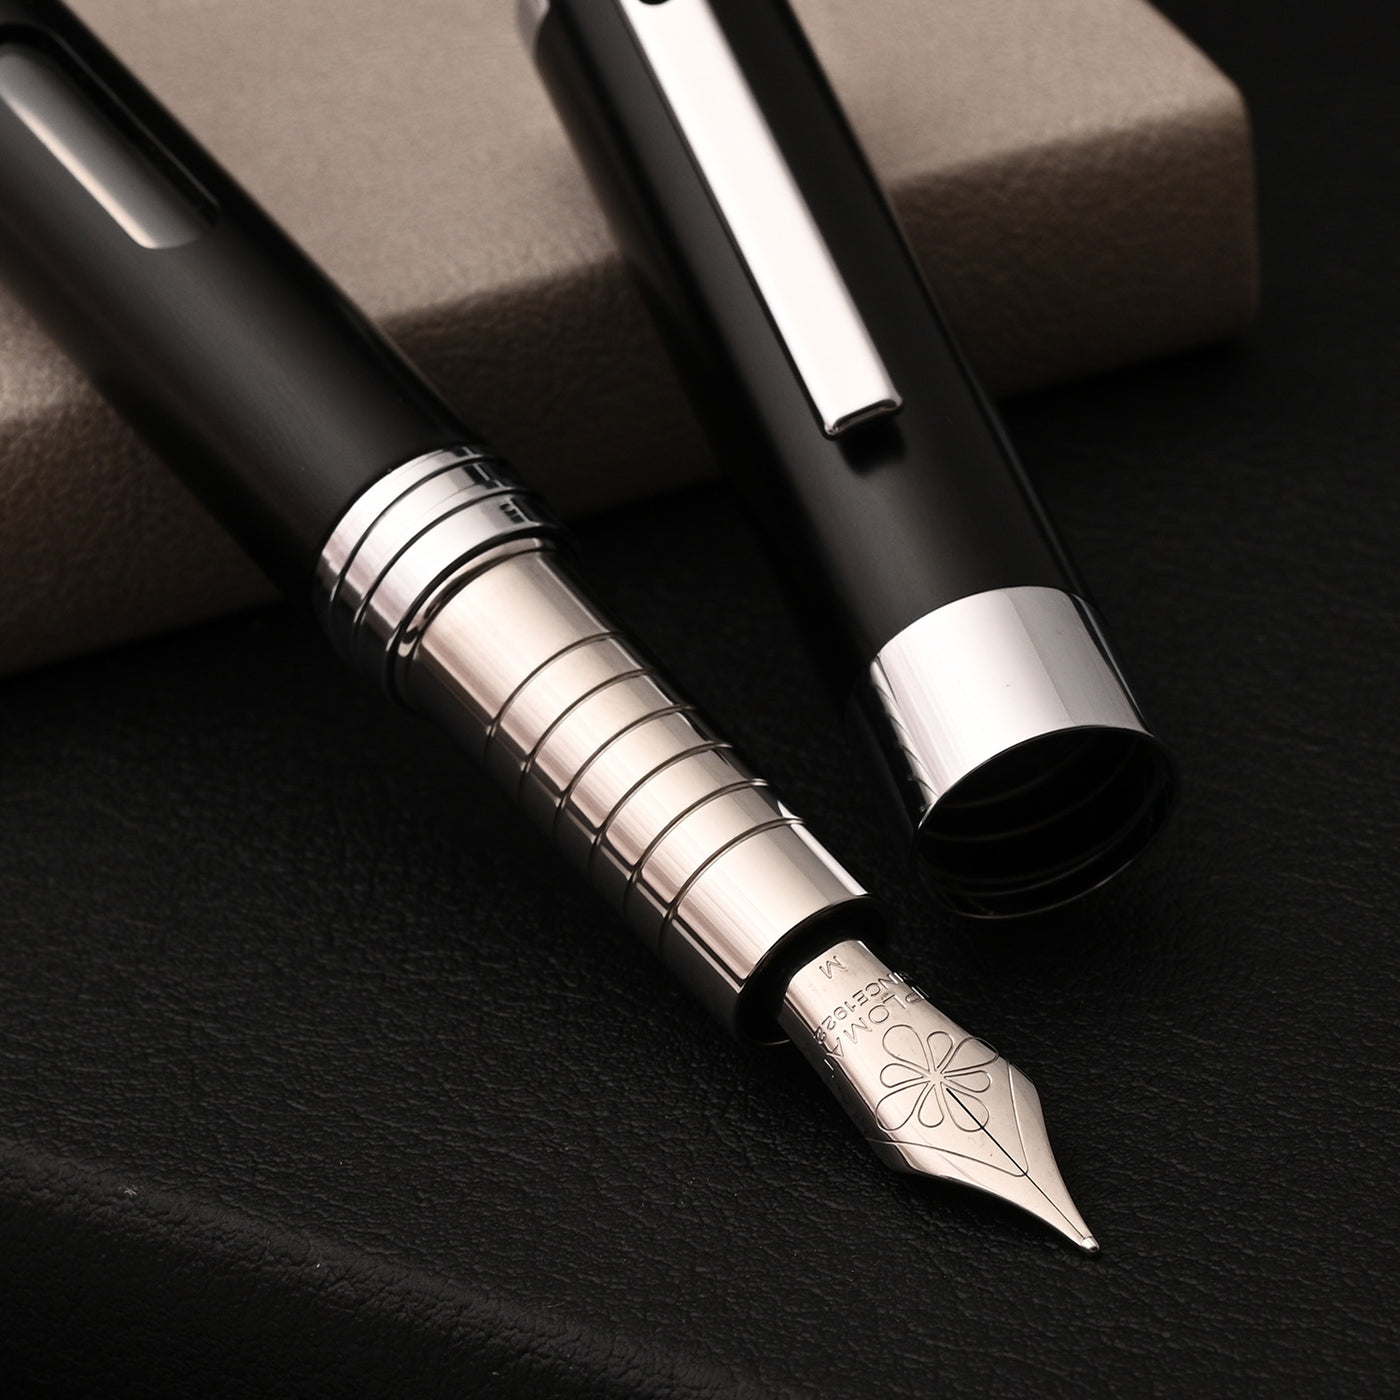 Diplomat Nexus Fountain Pen - Black/Chrome 7